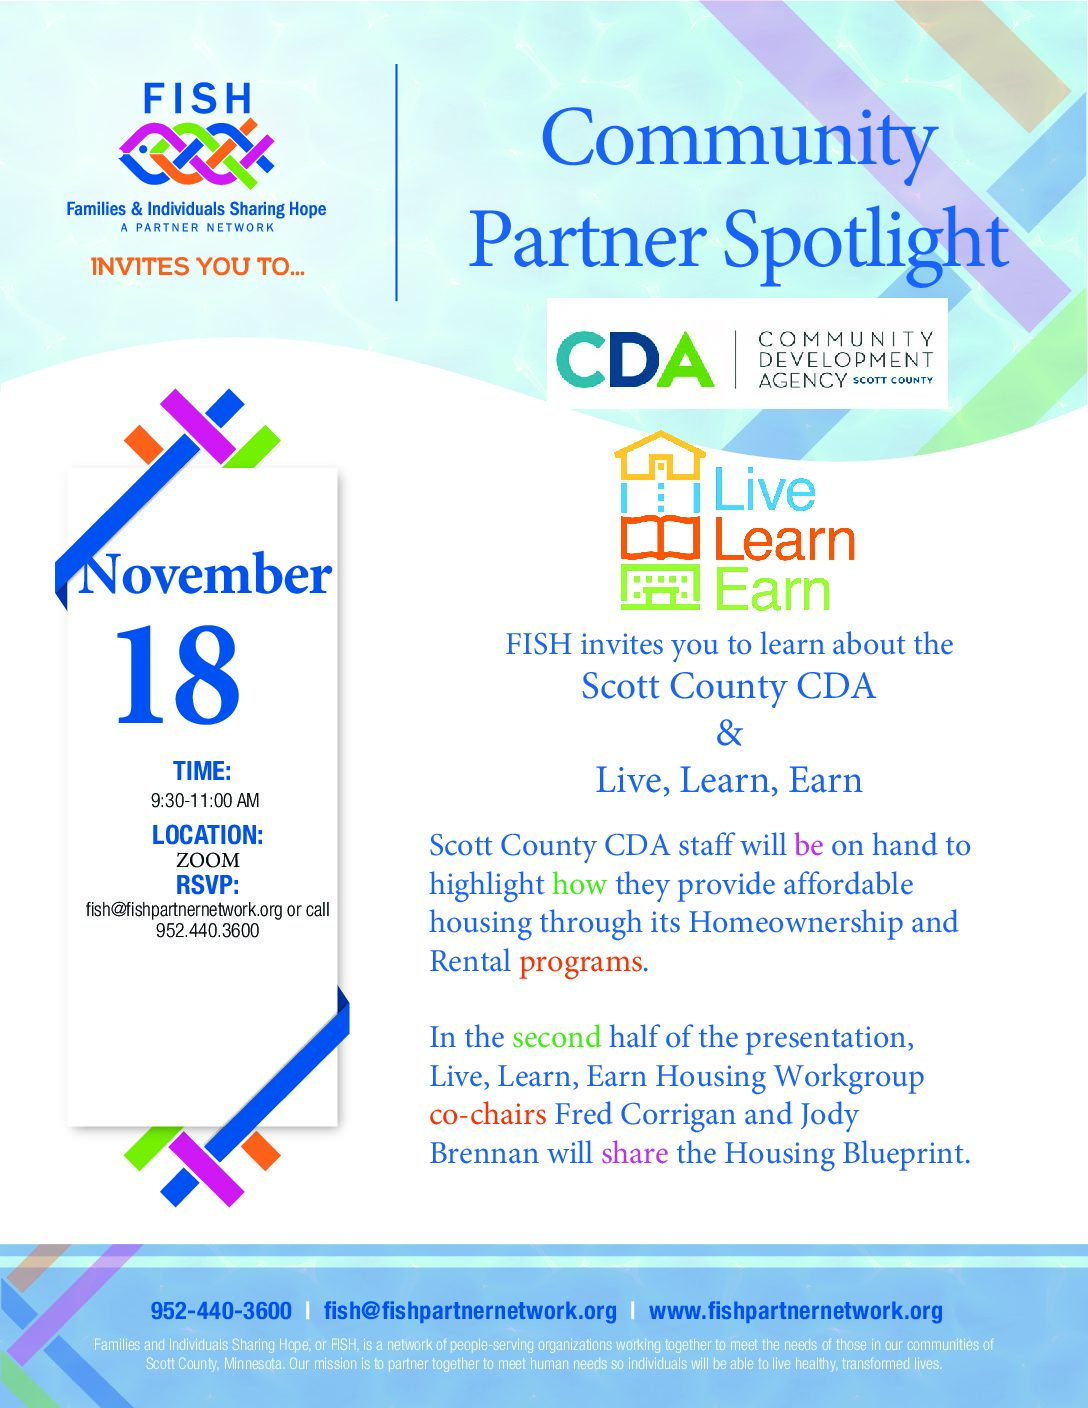 CDA Community Partner Spotlight and Live, Learn, Earn